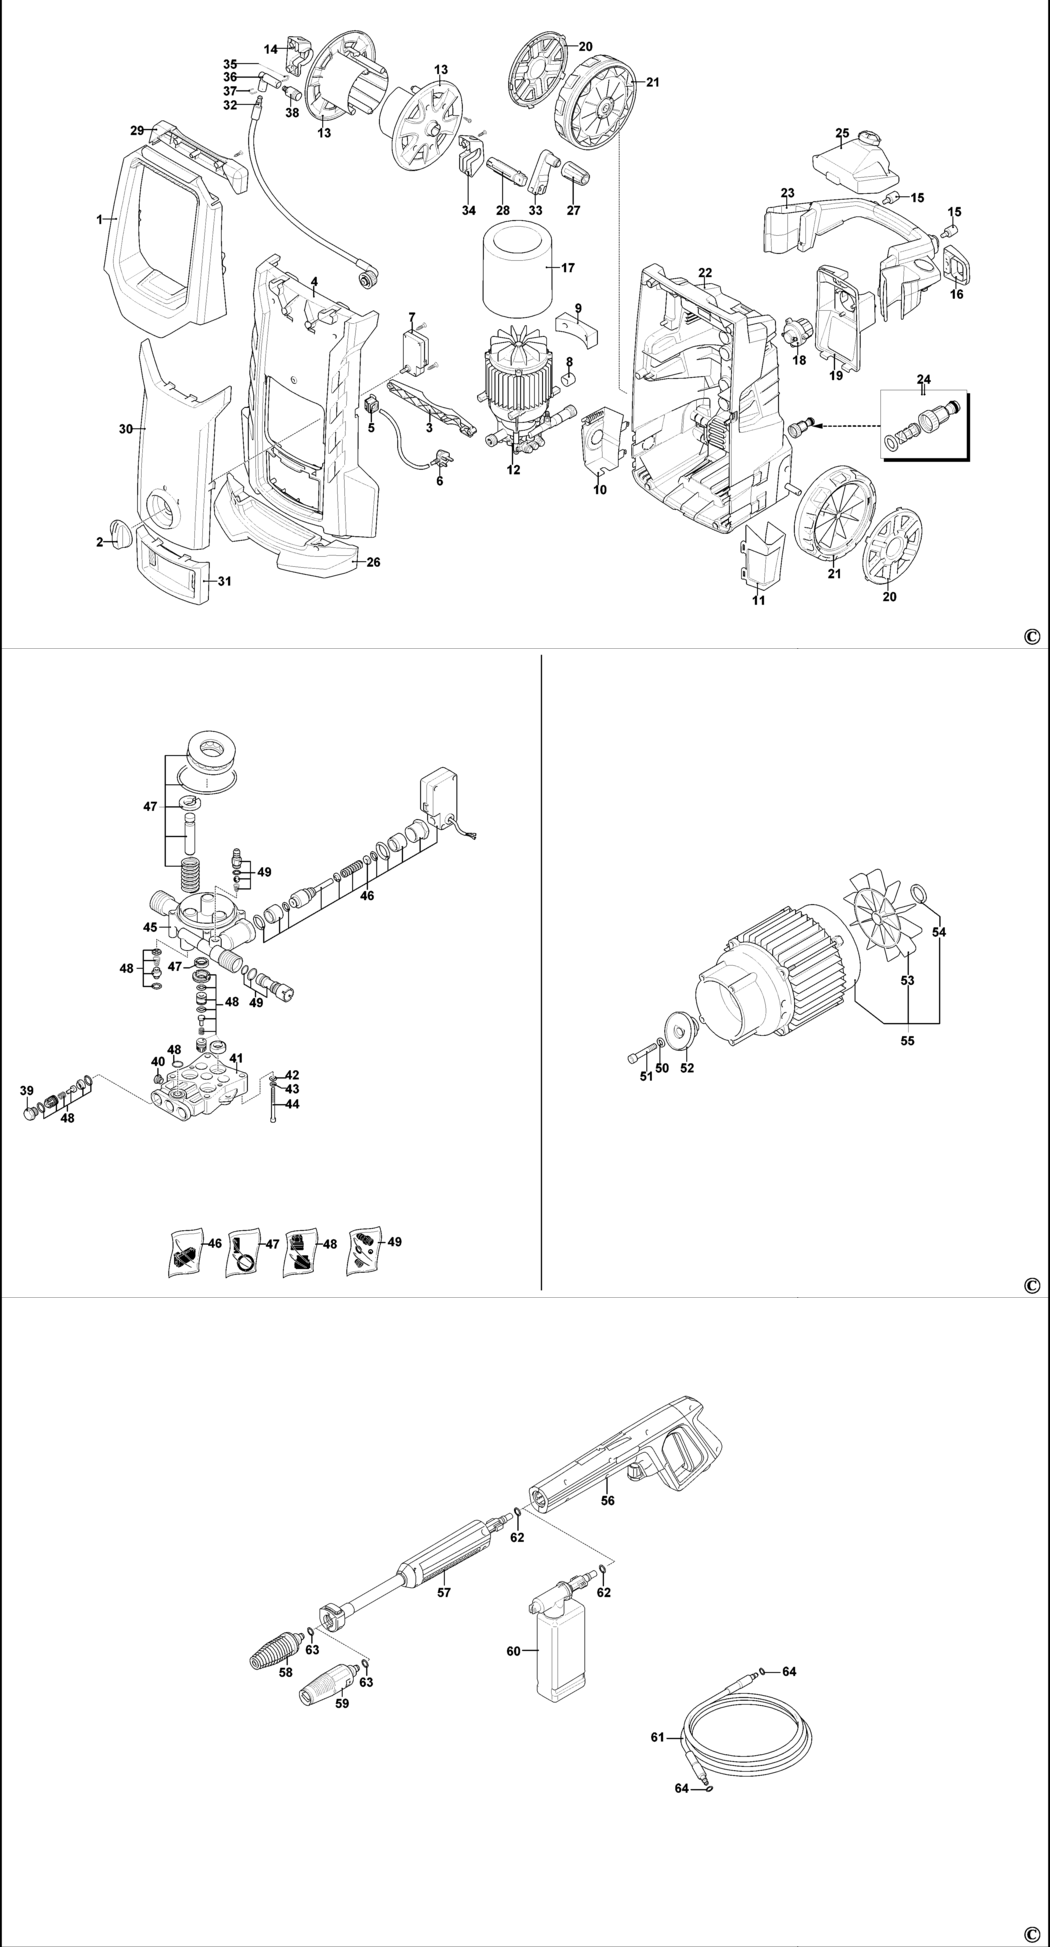 Stanley SW21 Type 1 Pressure Washer Spare Parts